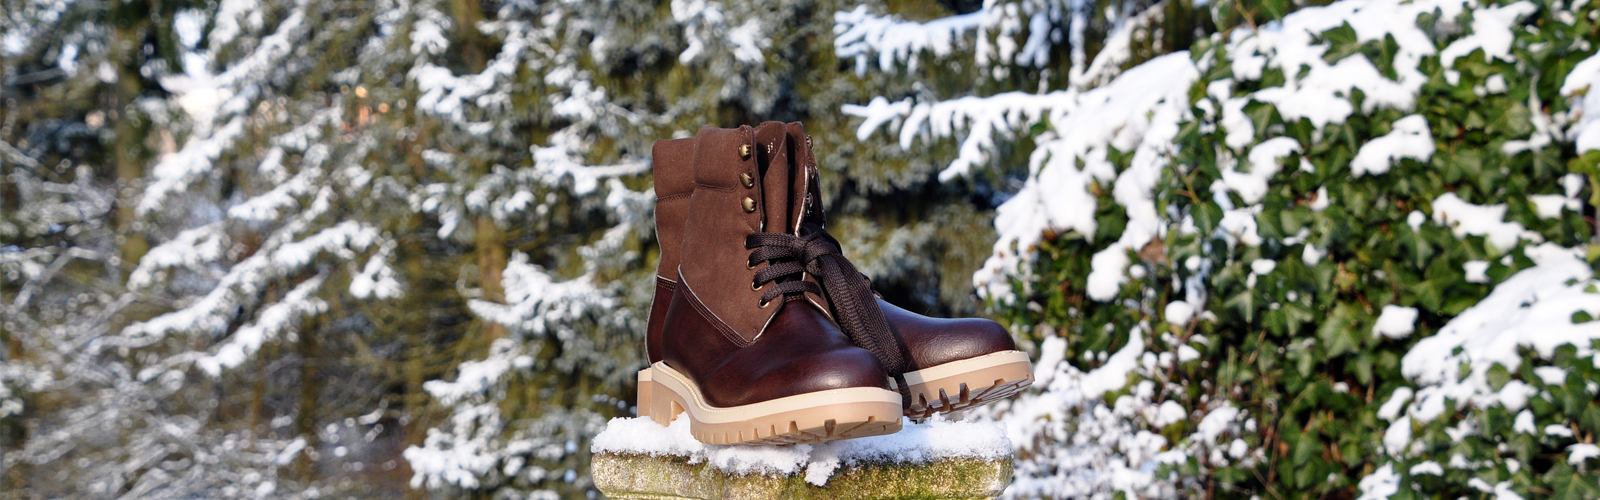 Vegan winter shoes